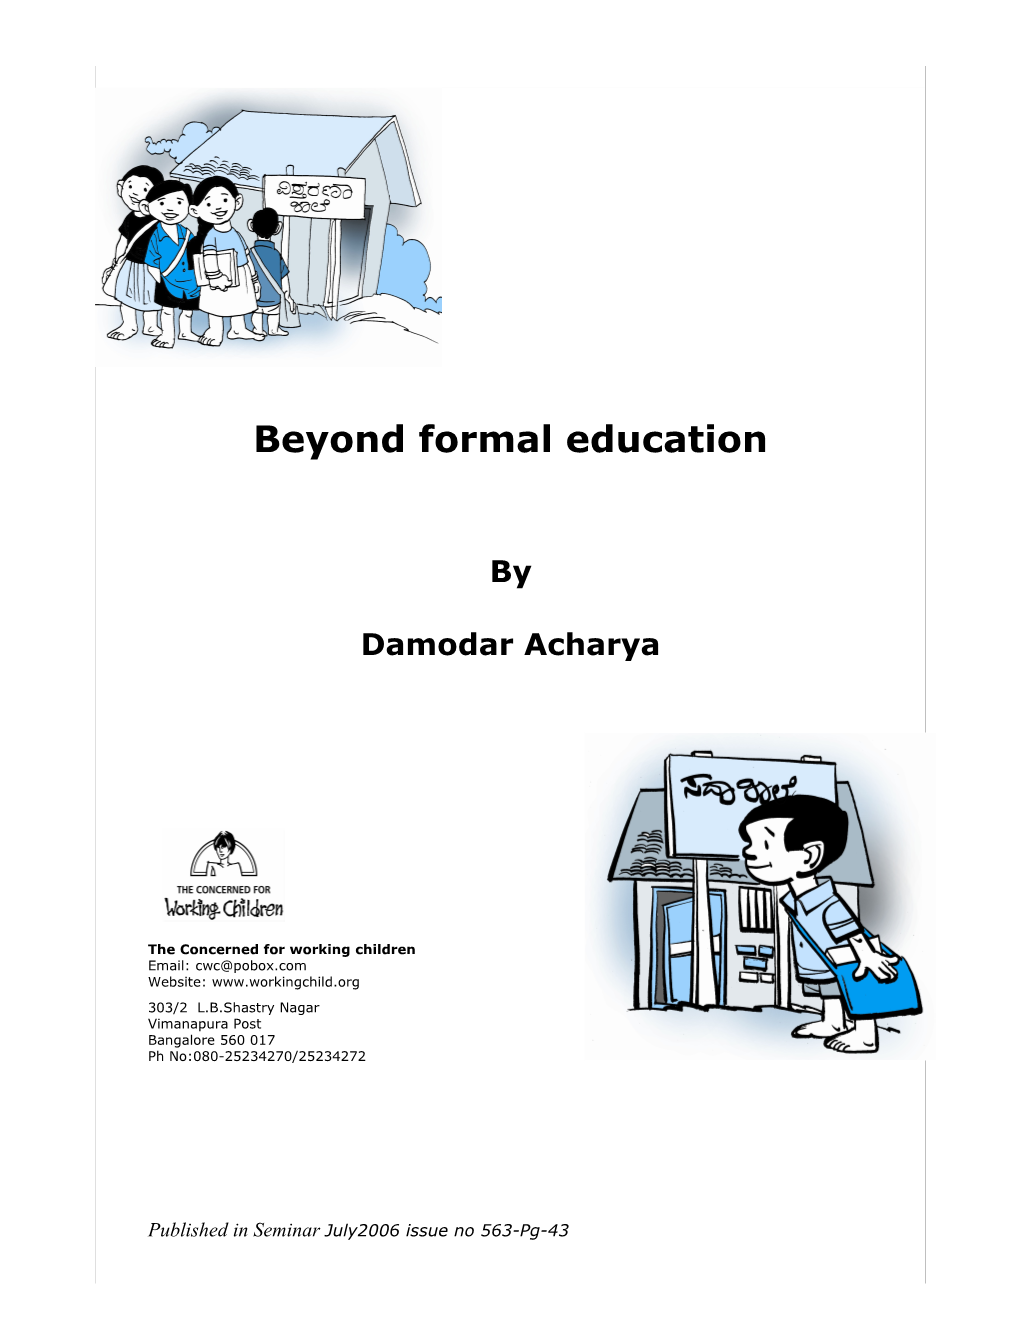 Beyond Formal Education